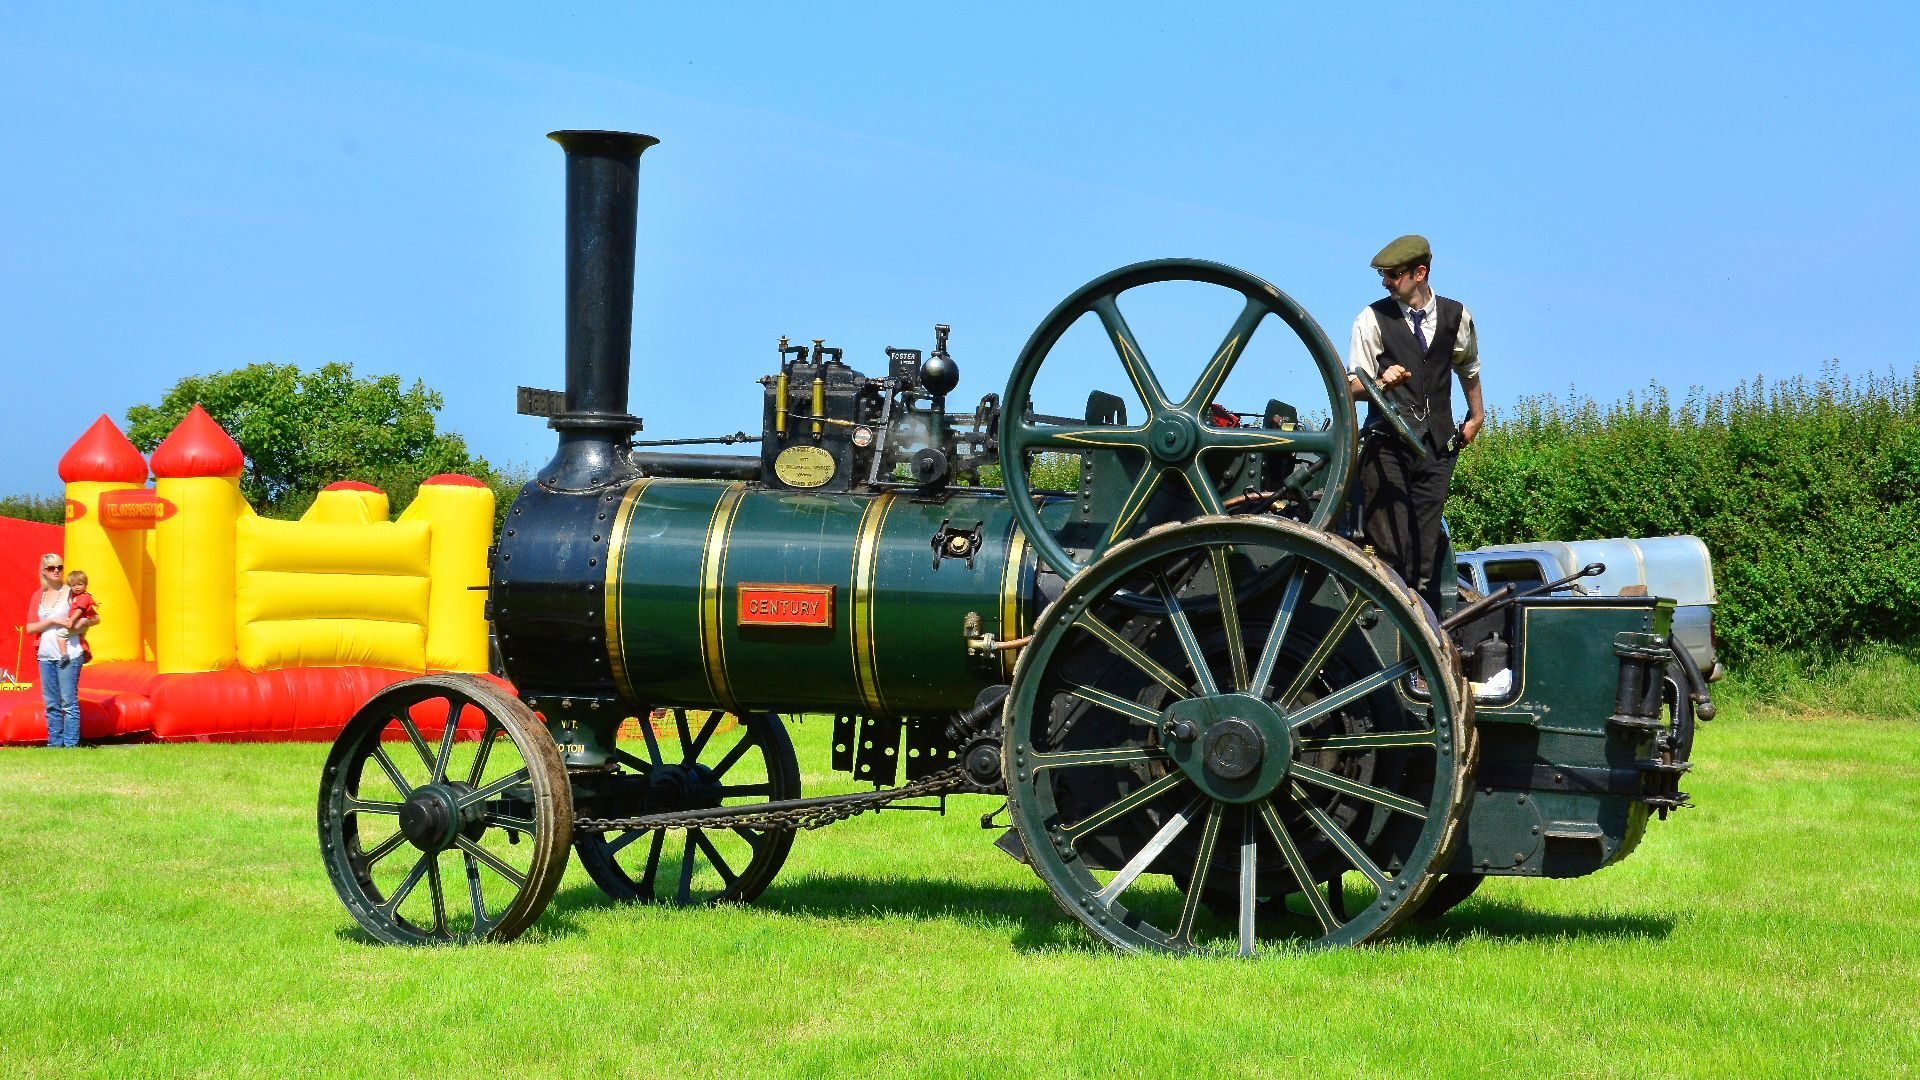 Historic steam vehicle